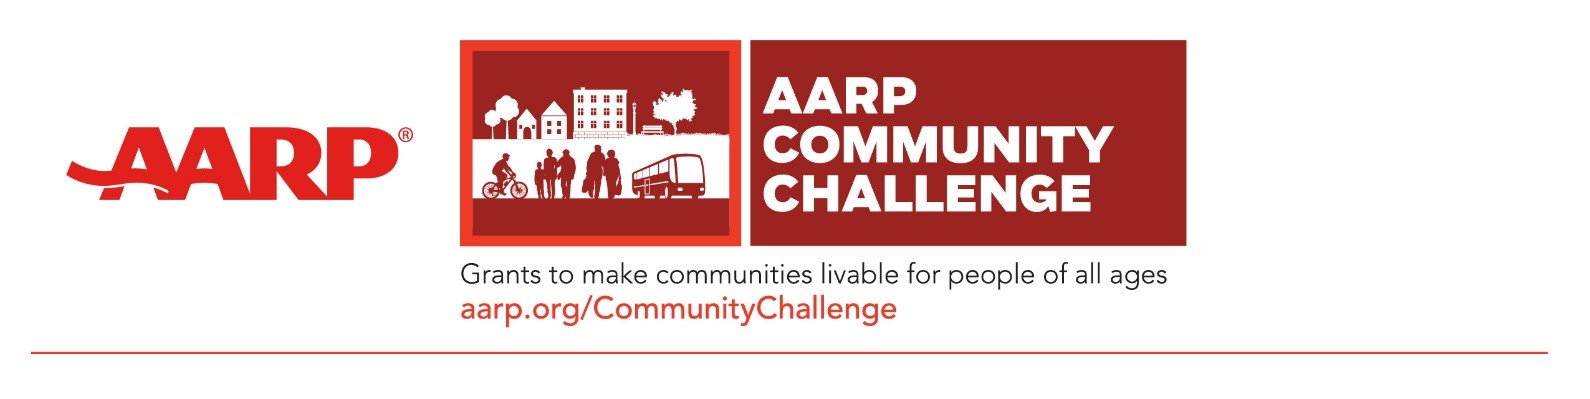 community challenge grant logo.jpg